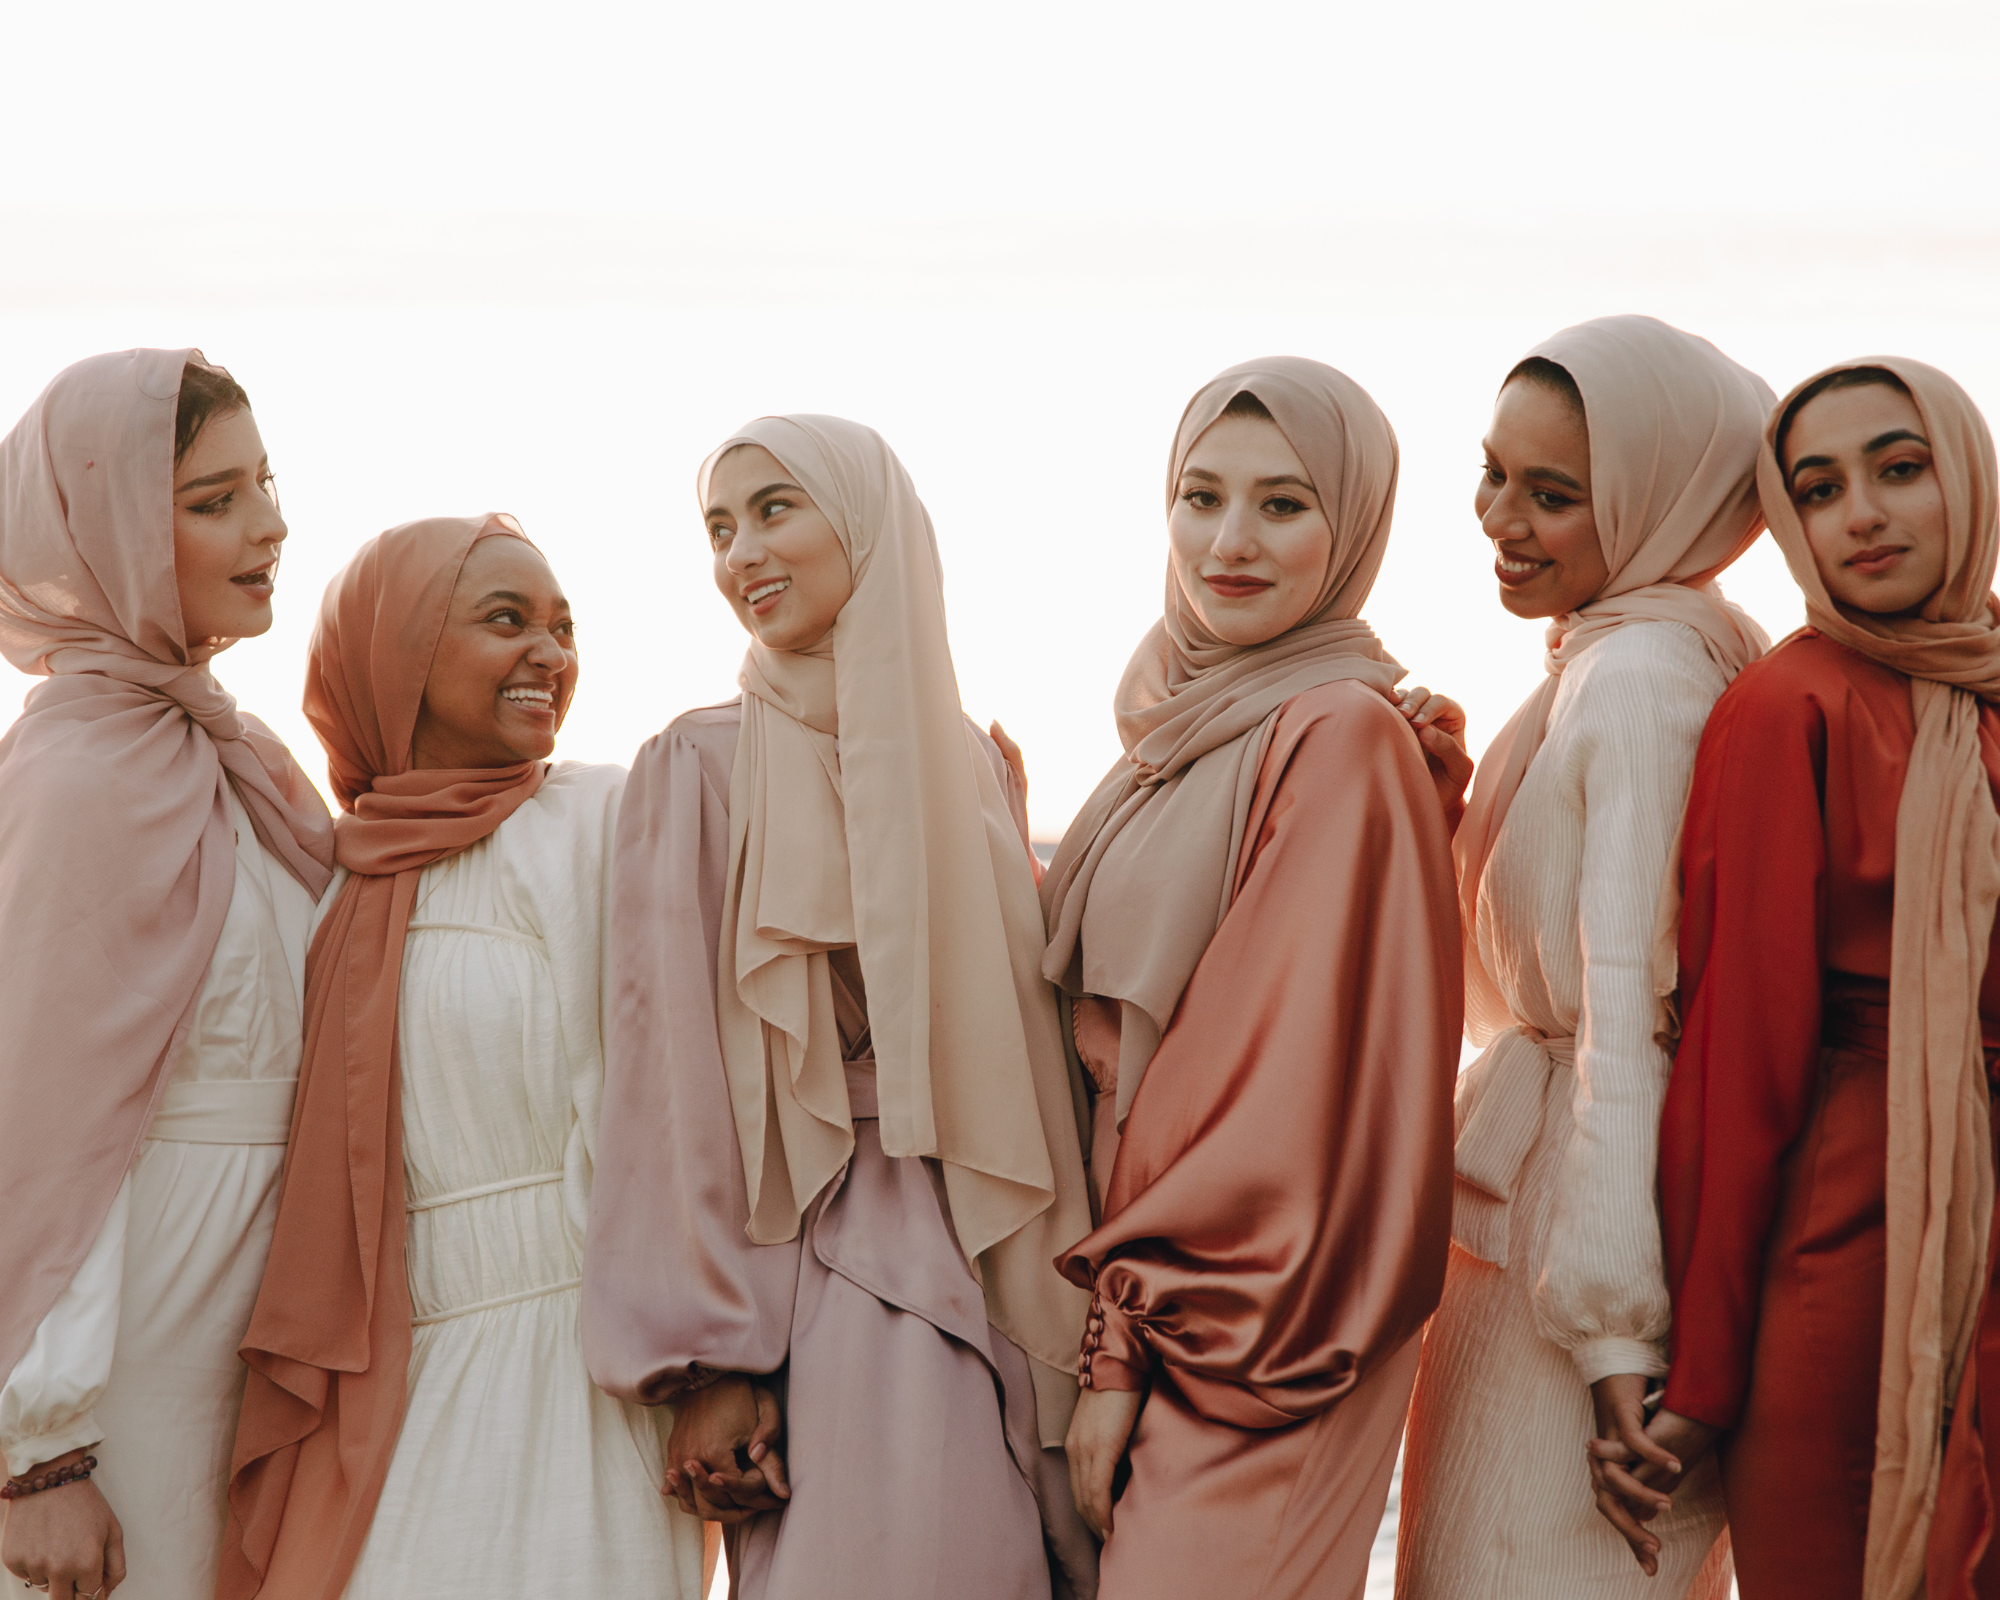 world hijab day